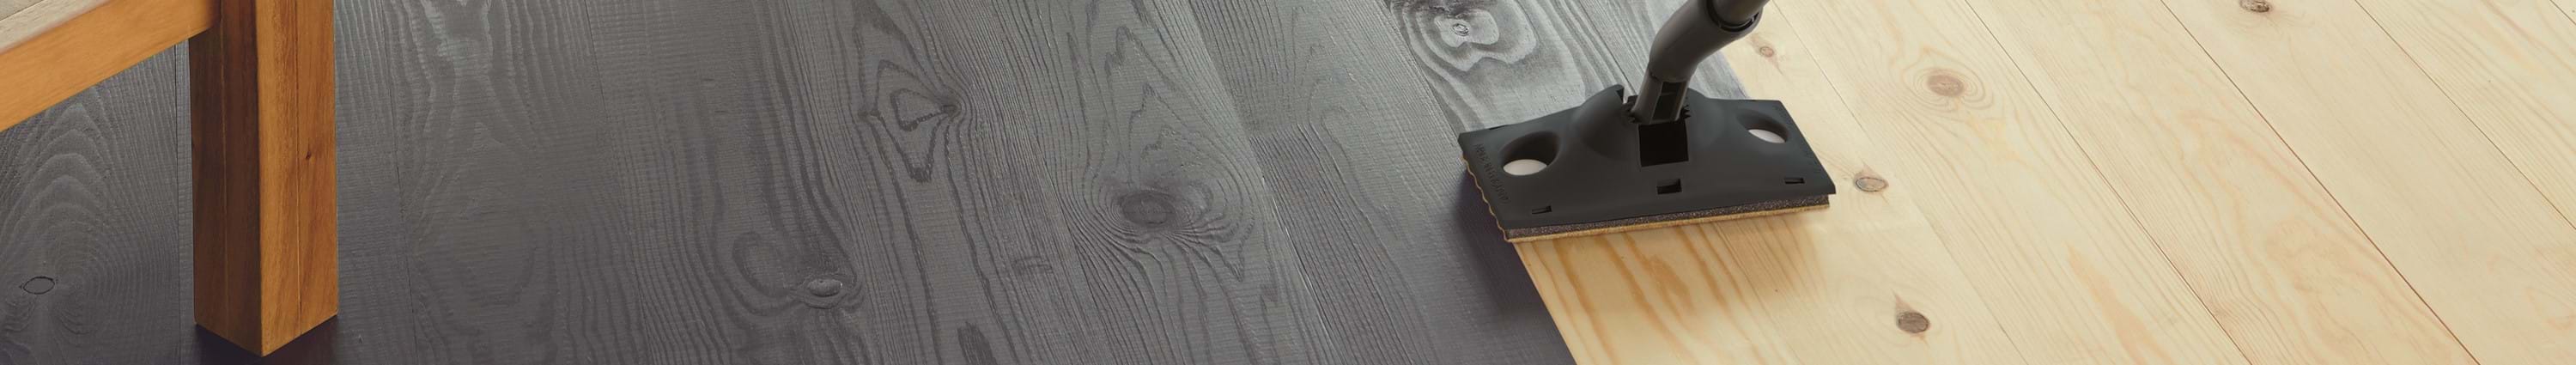 wood floor paint category.jpg